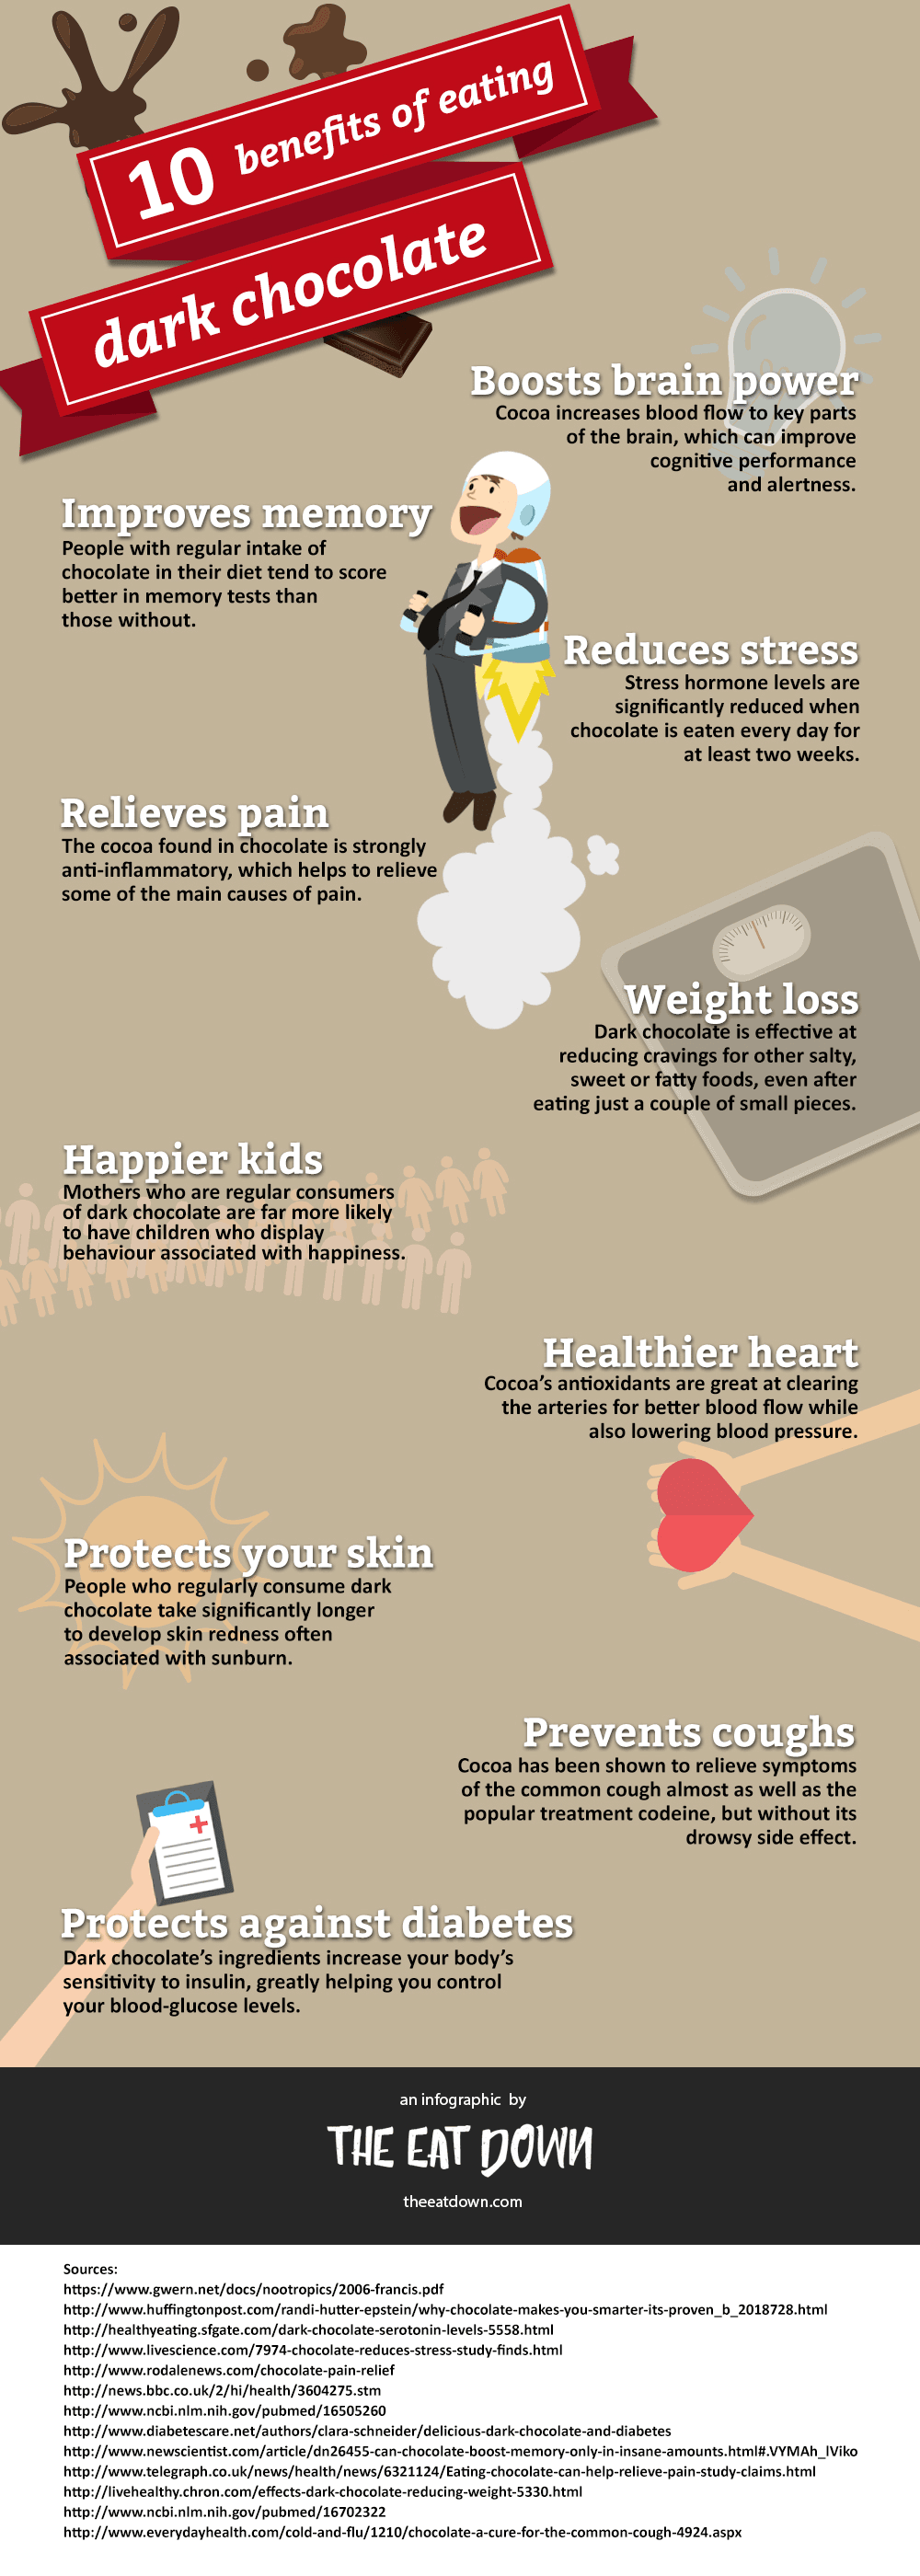 the eat down dark chocolate health benefits infographic